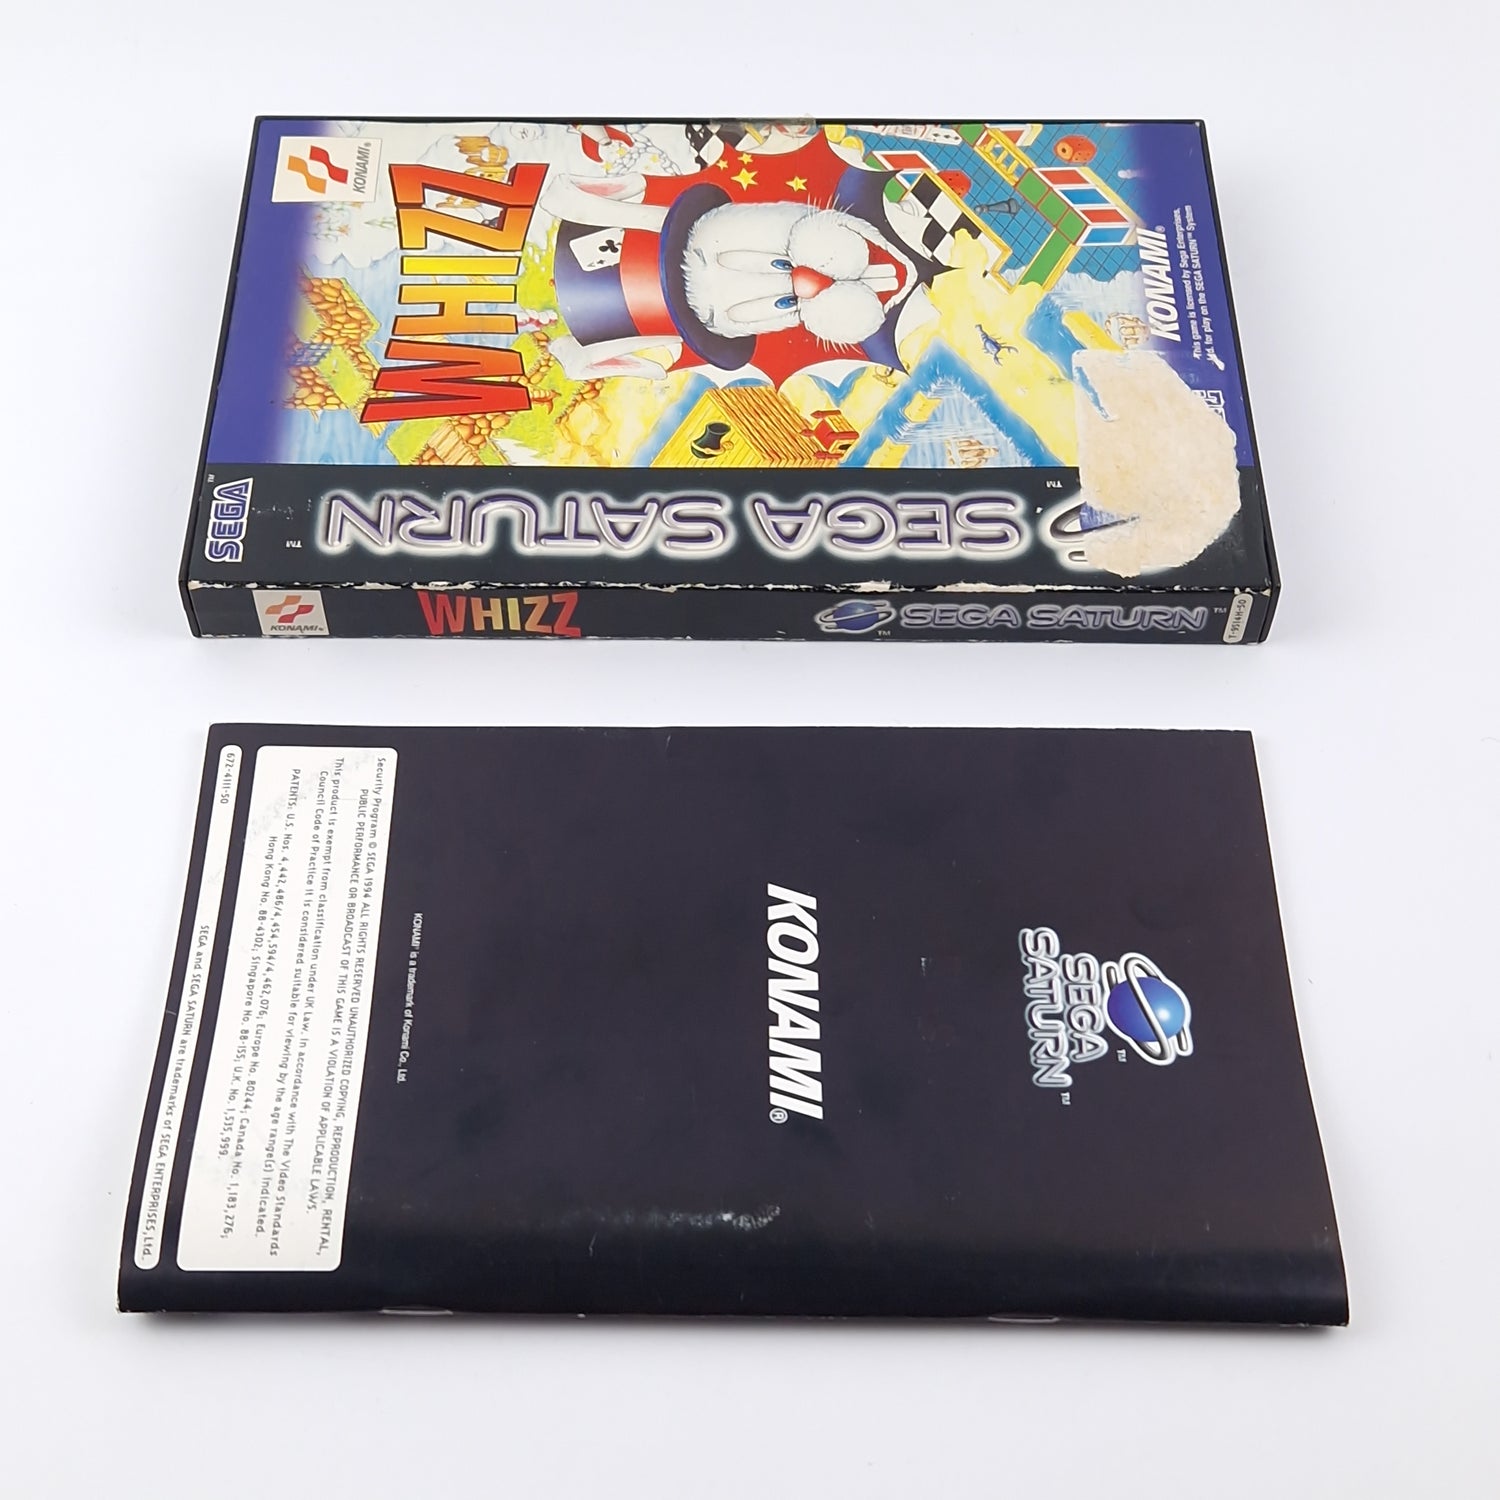 Sega Saturn Game: WHIZZ - OVP Instructions CD Disk | PAL Konami Game